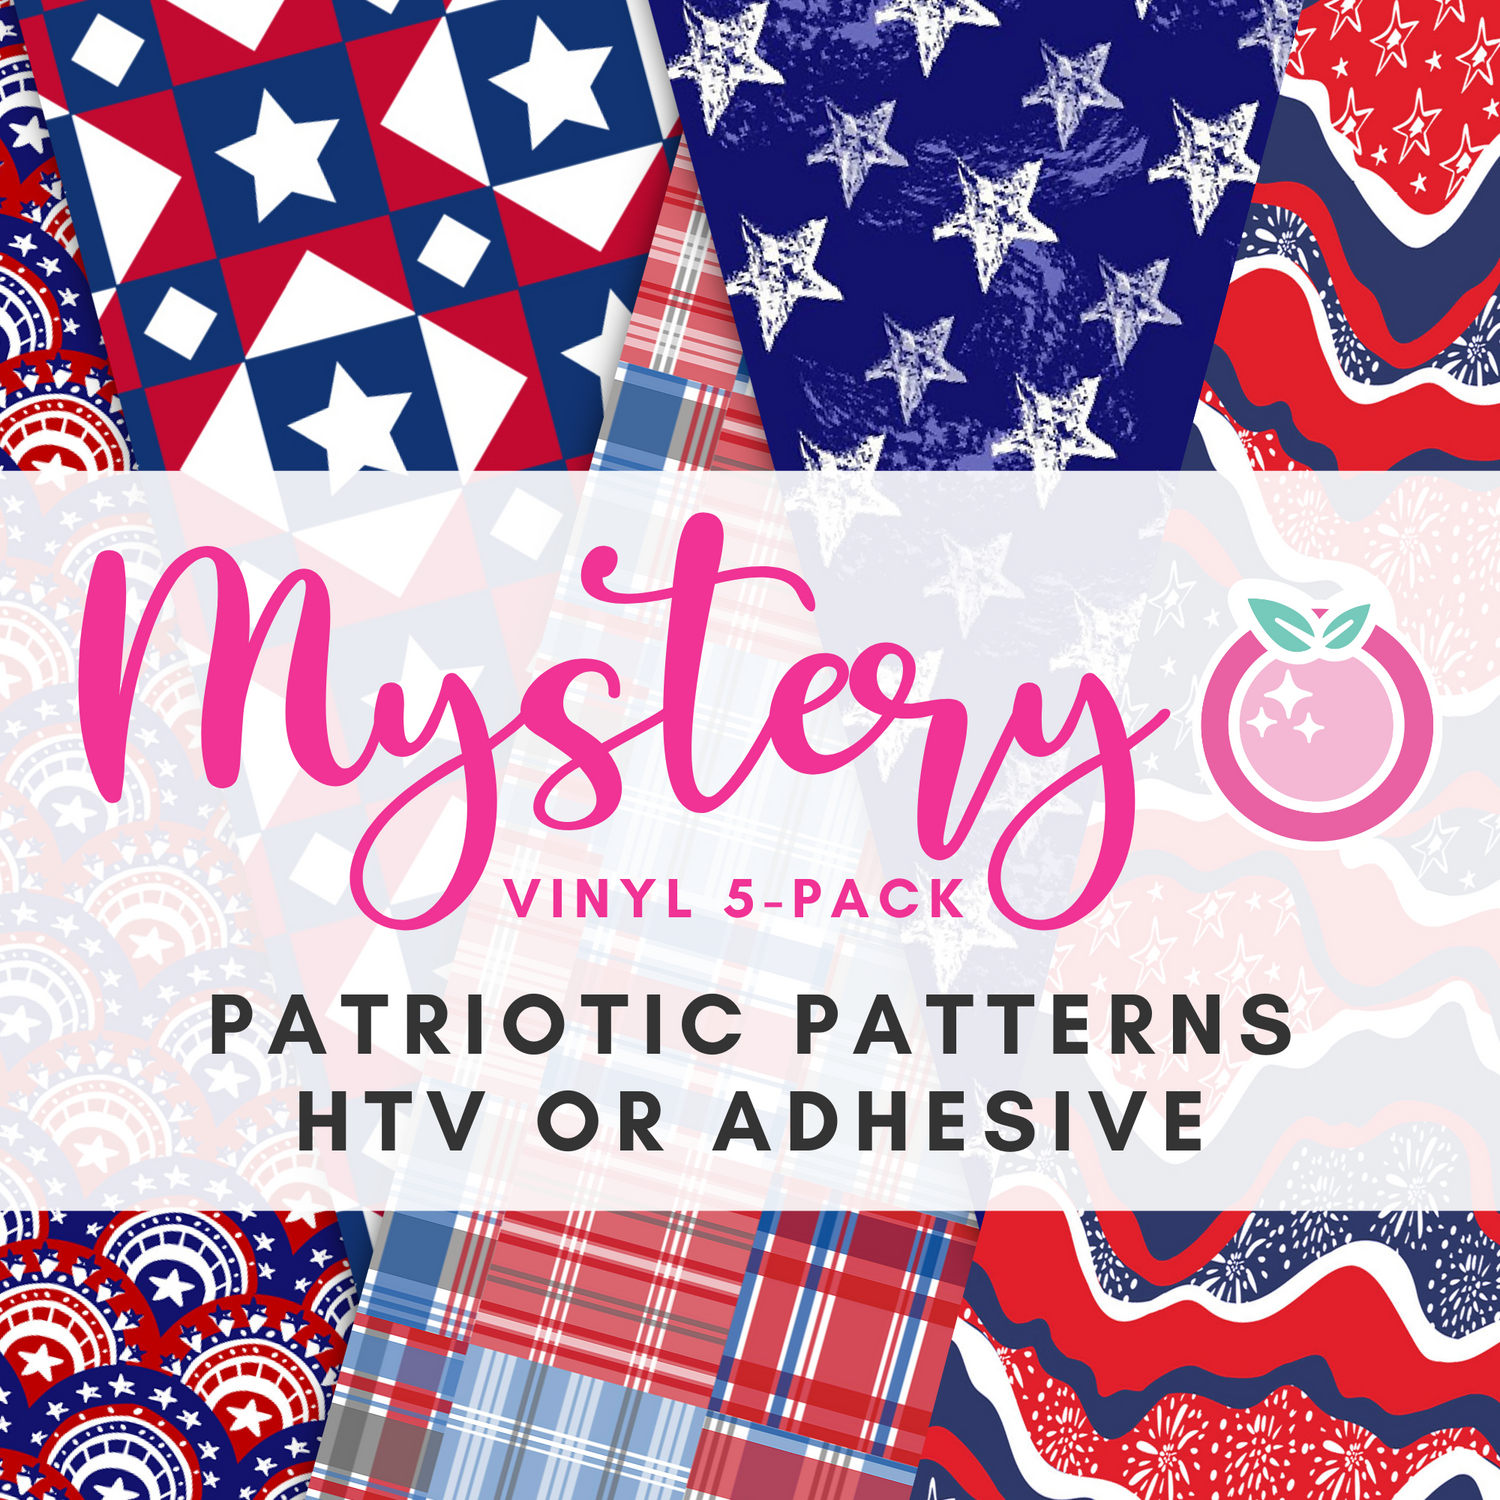 Holiday Mystery Pattern Vinyl 5-Packs